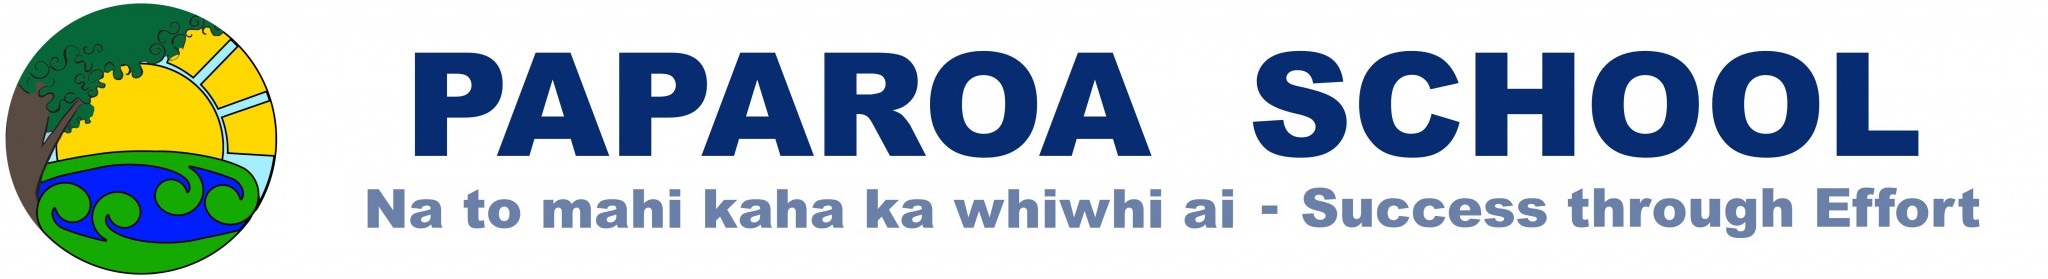 Paparoa Primary School Logo